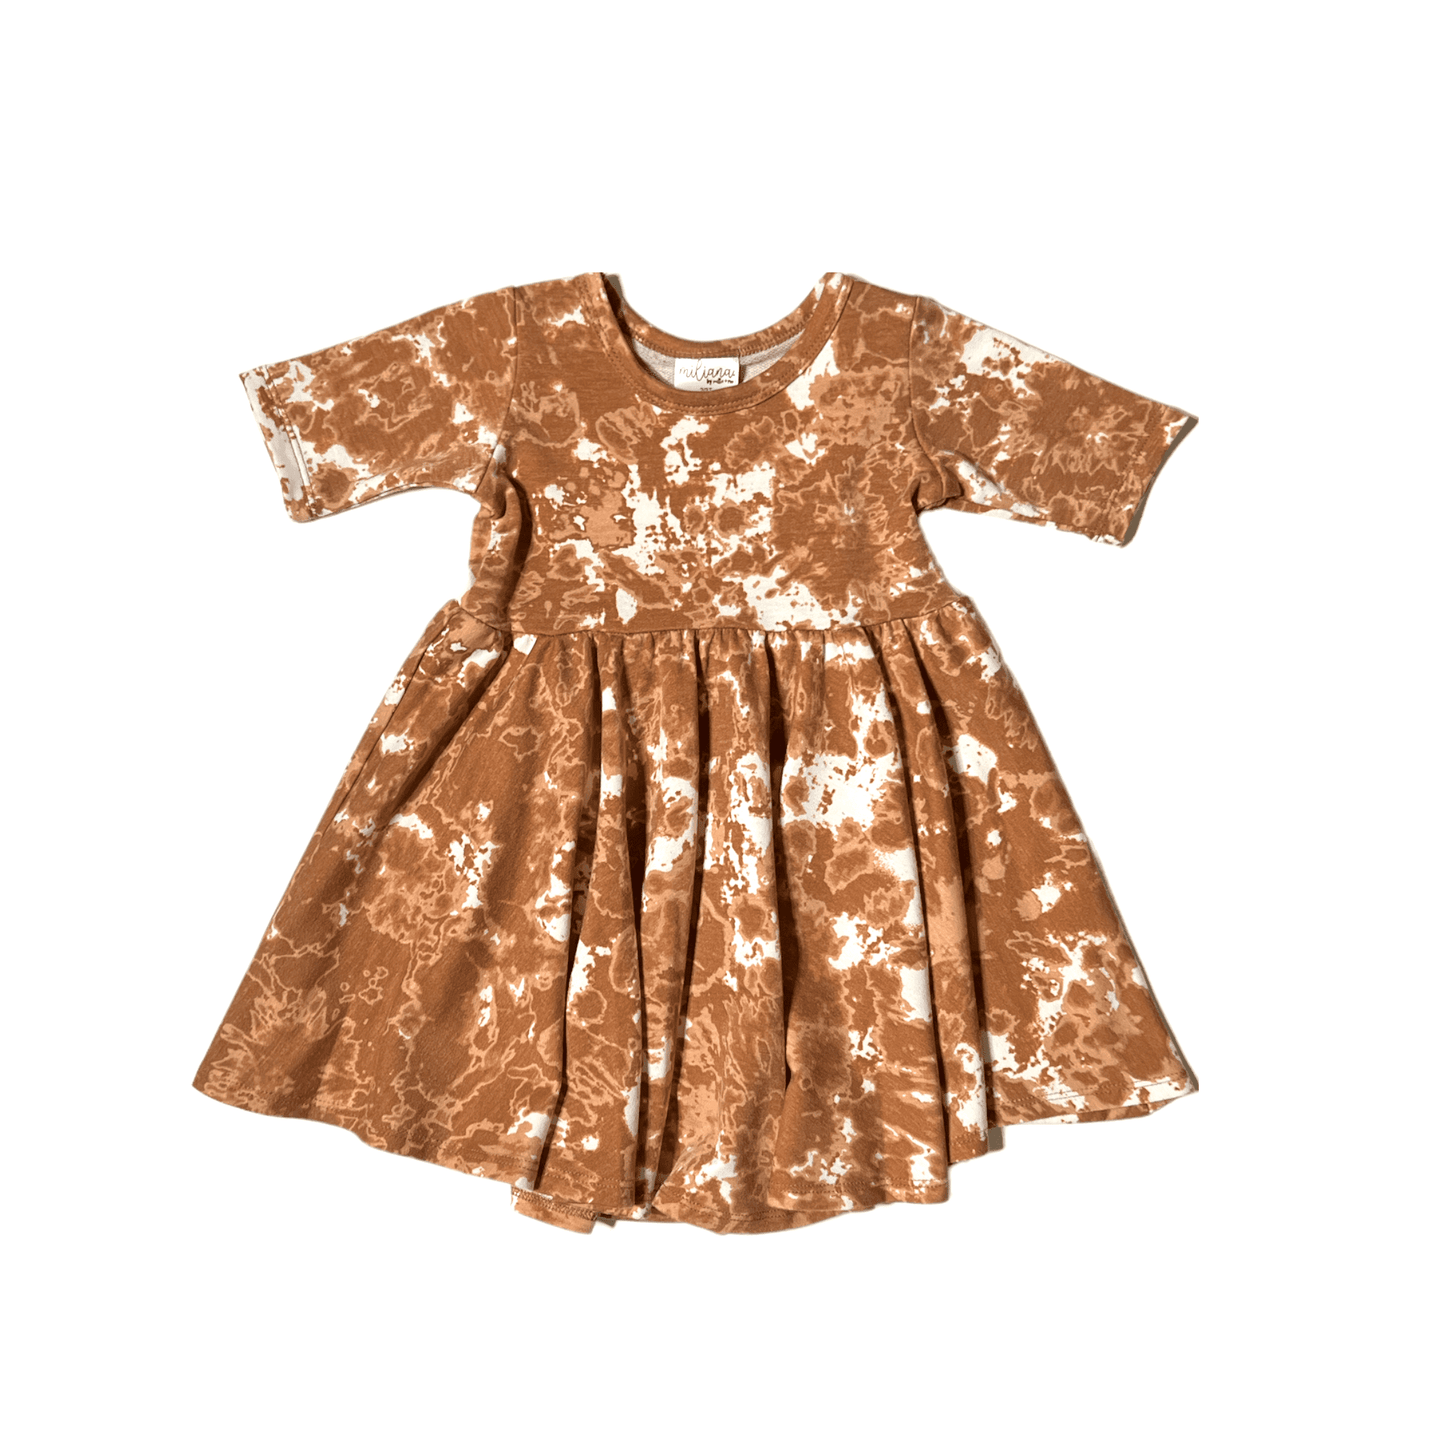 DRESS MID SLEEVE- Chestnut Marble Twirl Dress